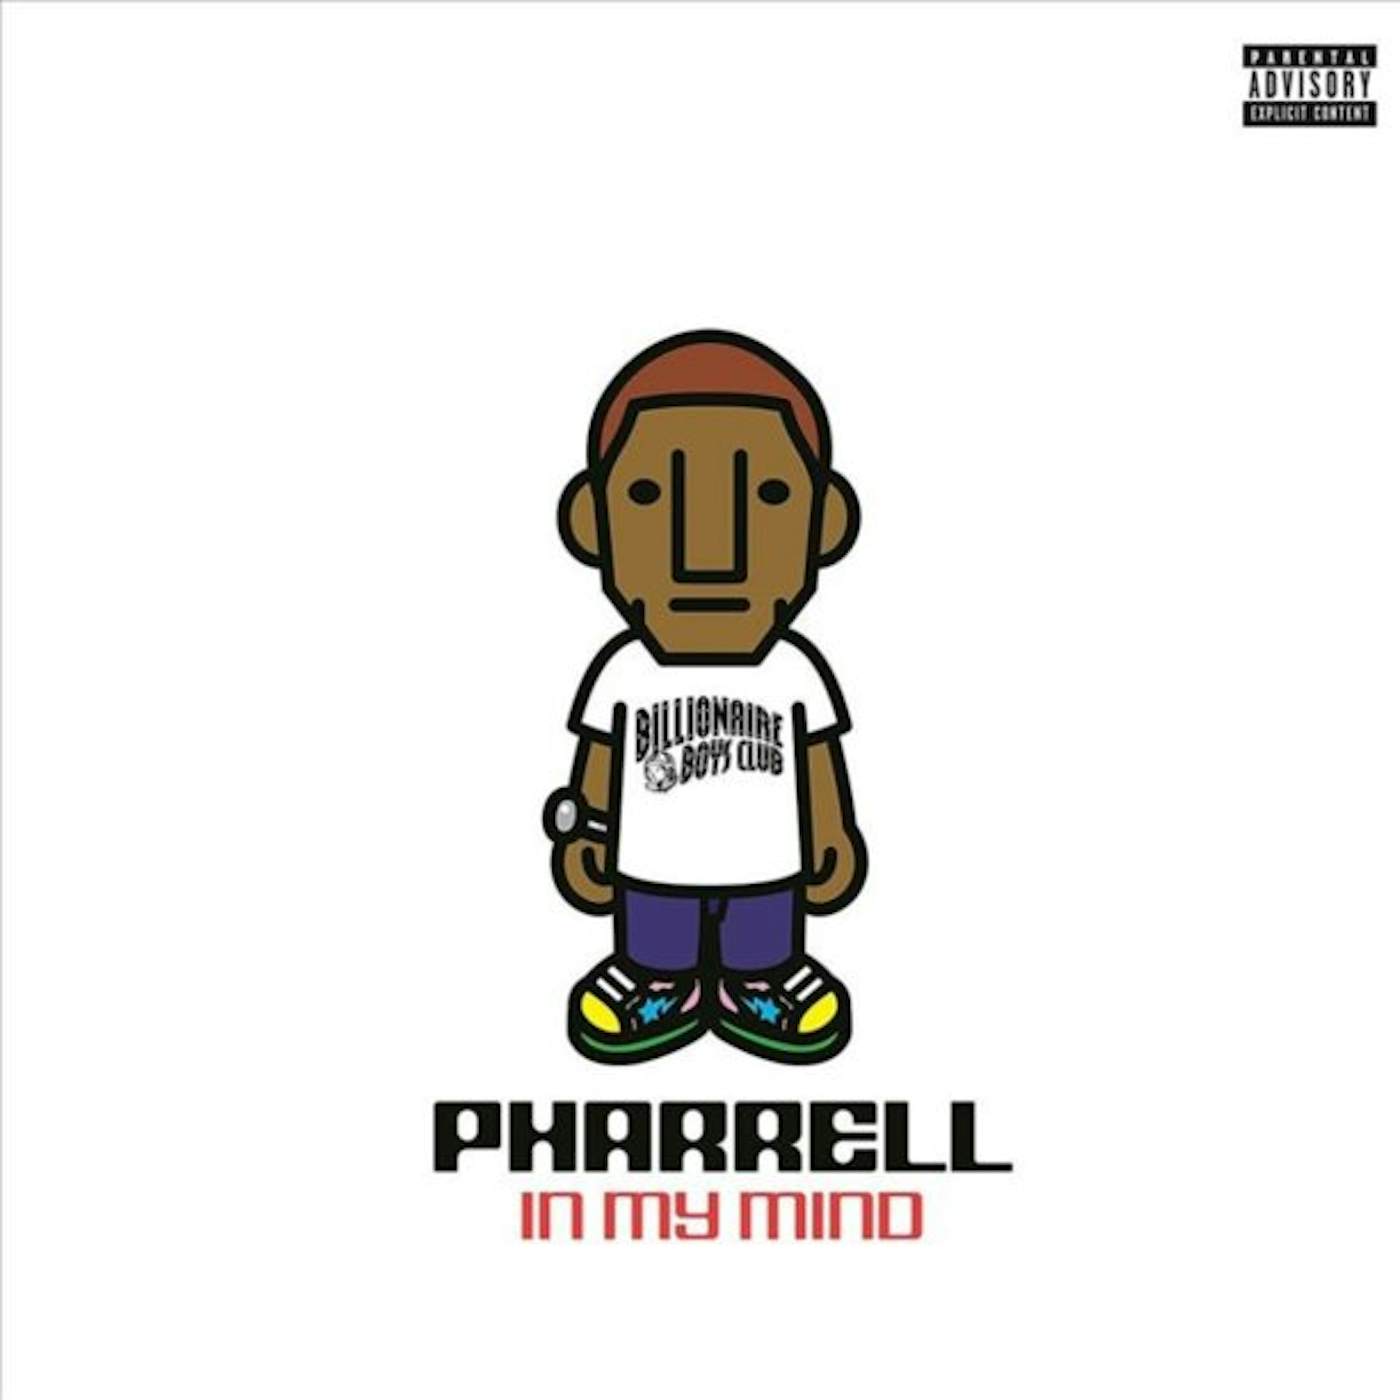 Pharrell Williams In My Mind Vinyl Record